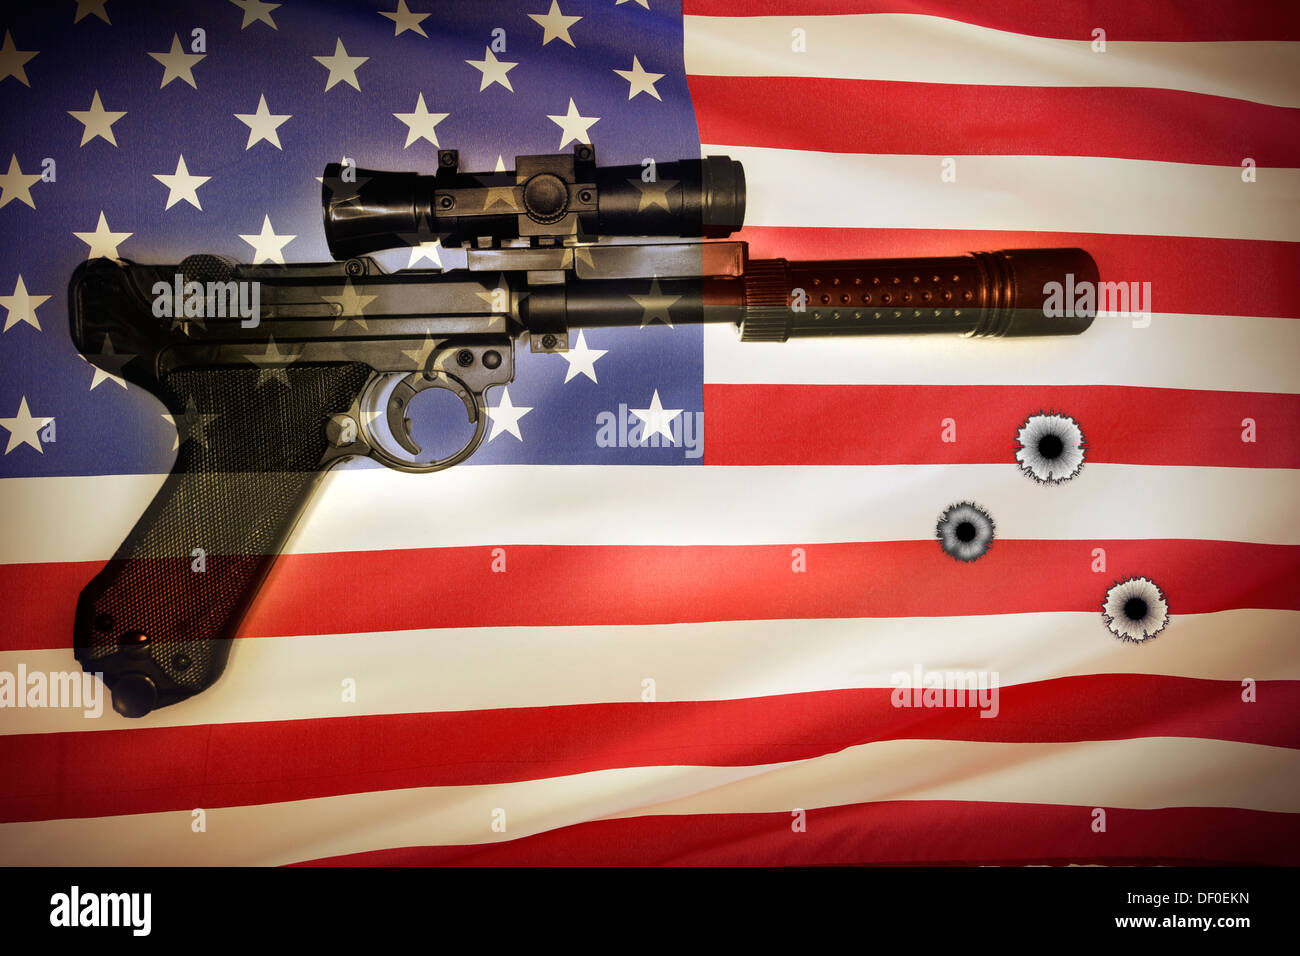 Handgun and American flag. Gun control idea Stock Photo